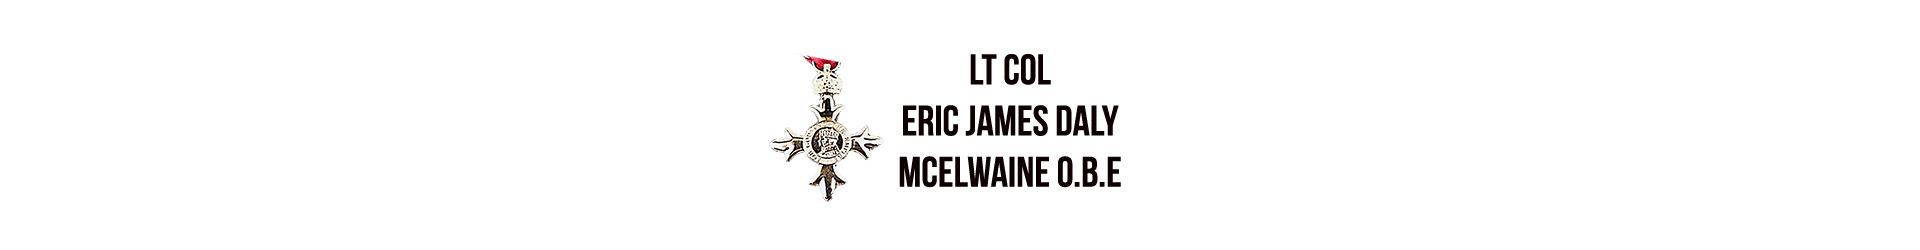 Lt Col Eric James Daly McElwaine O.B.E.